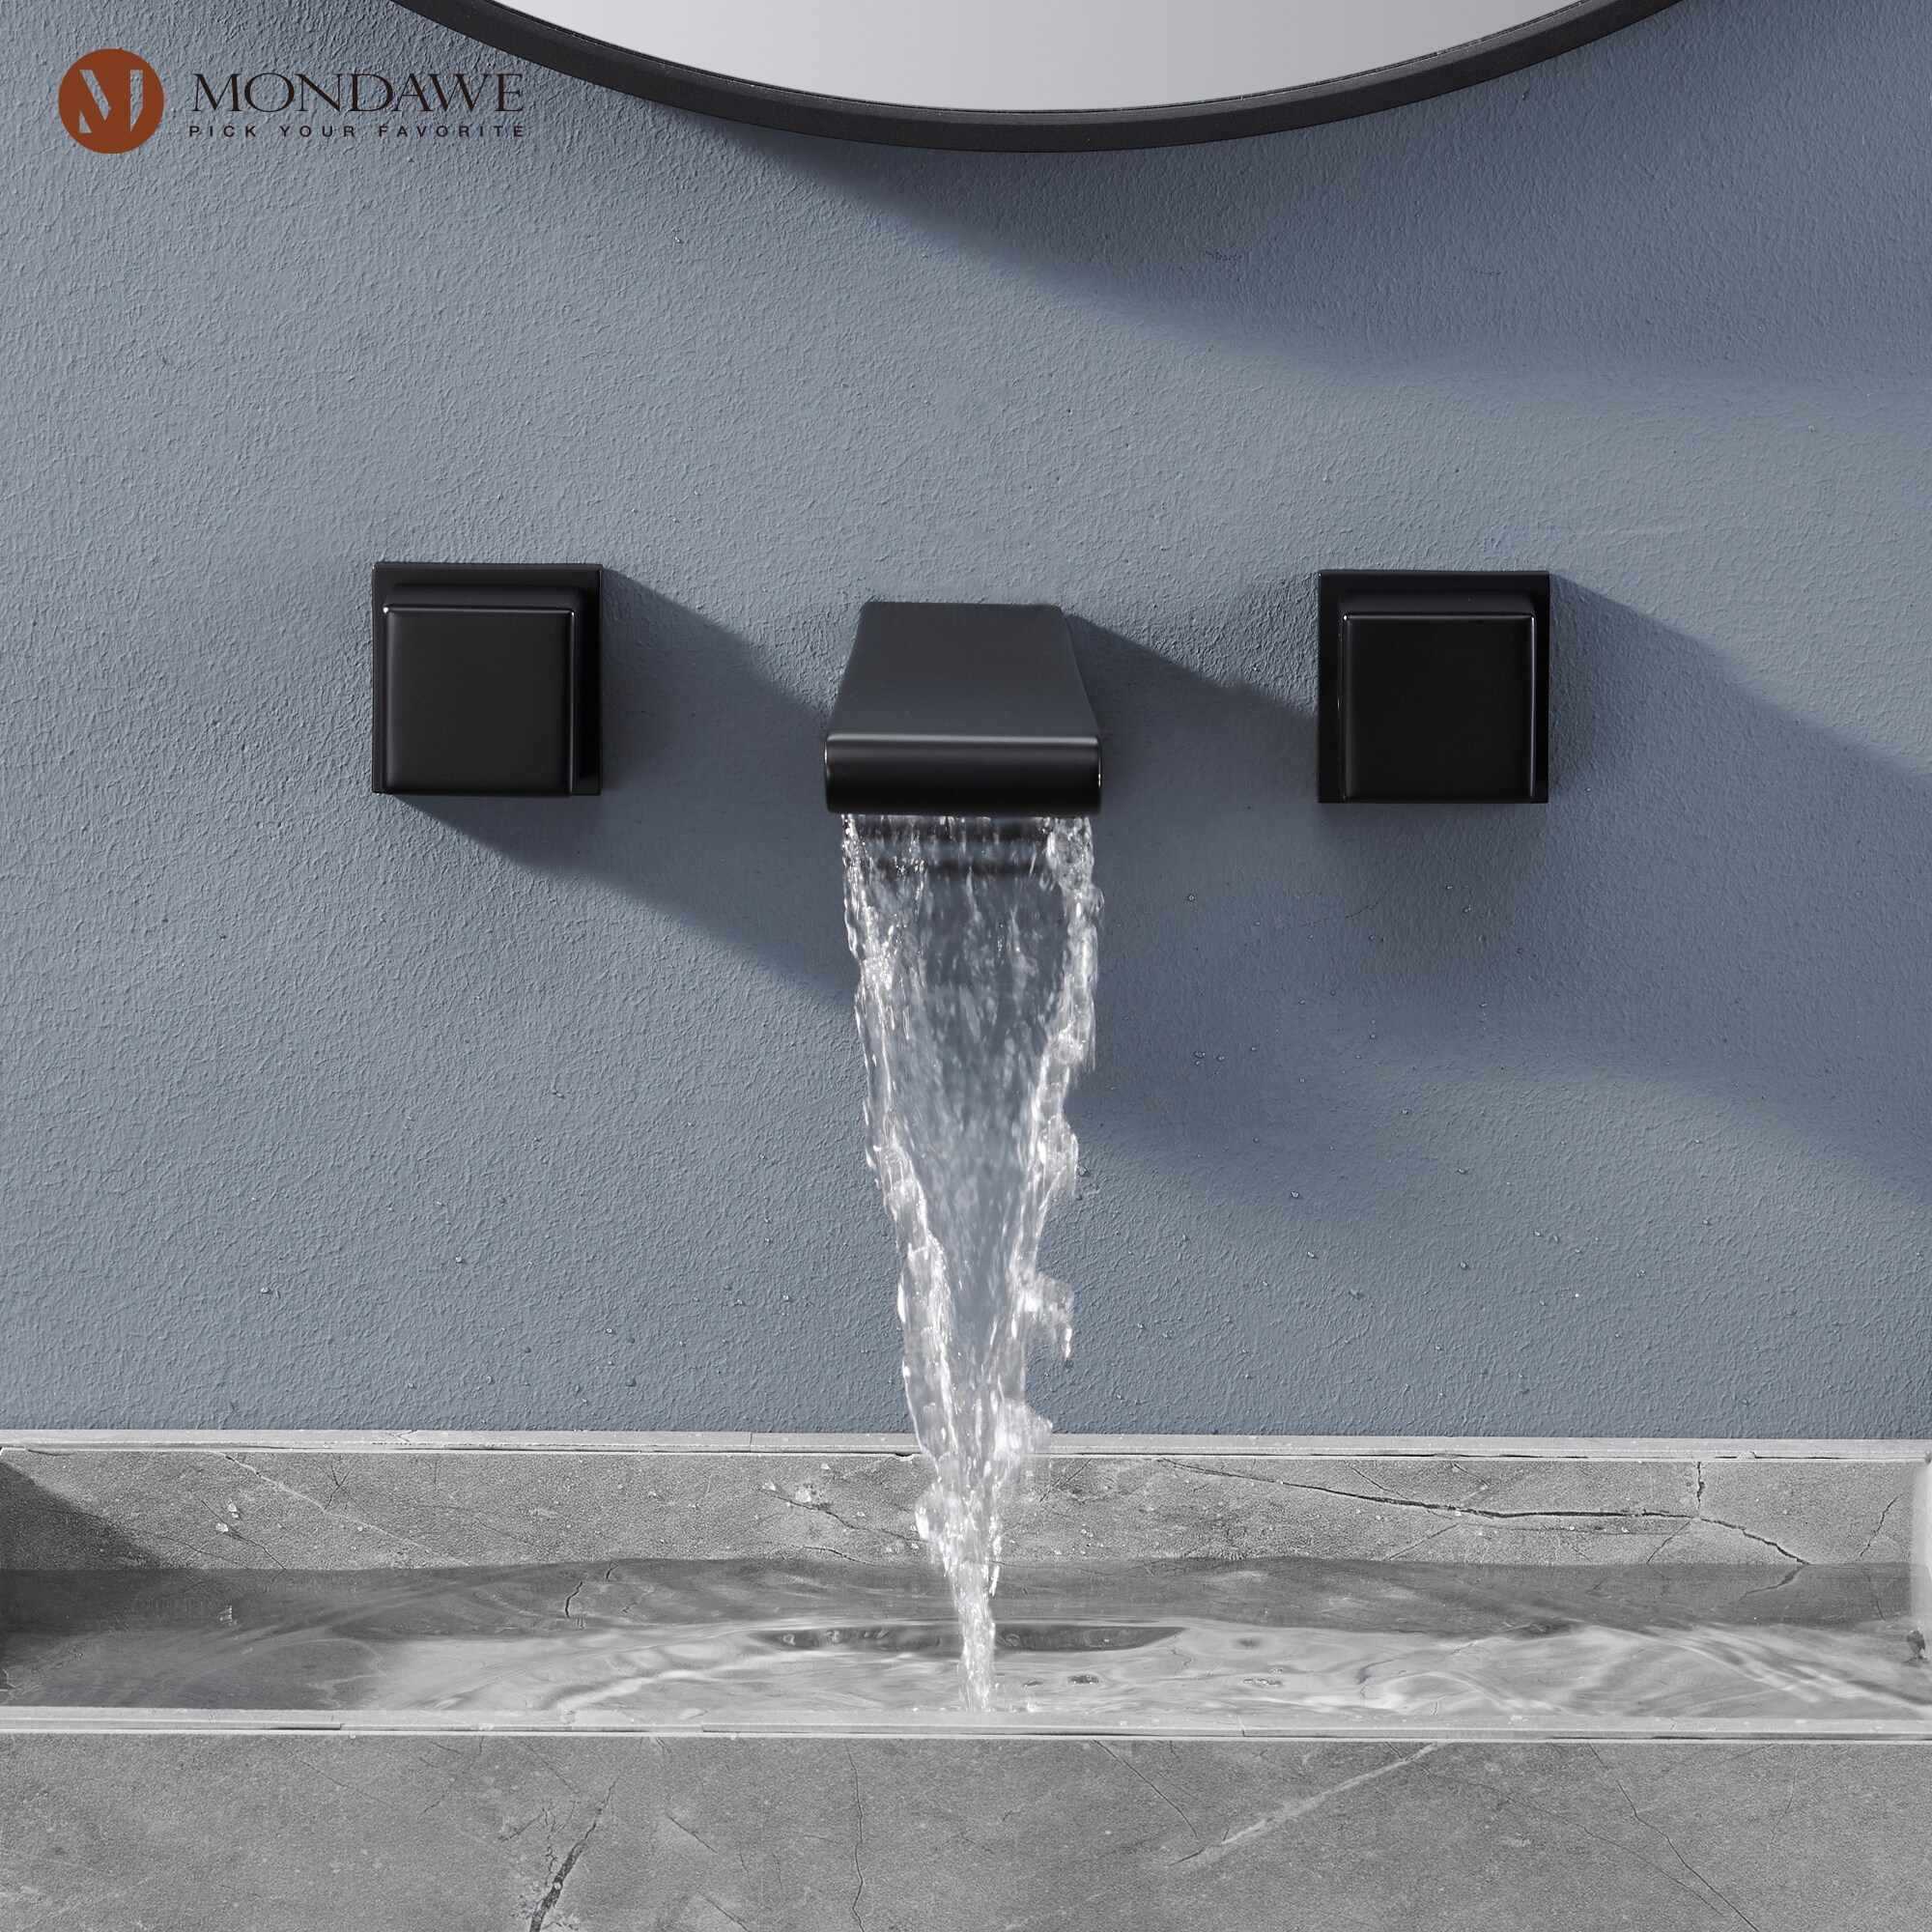 Mondawe Matte Black 2-handle Wall-mount Waterfall Bathroom Sink Faucet